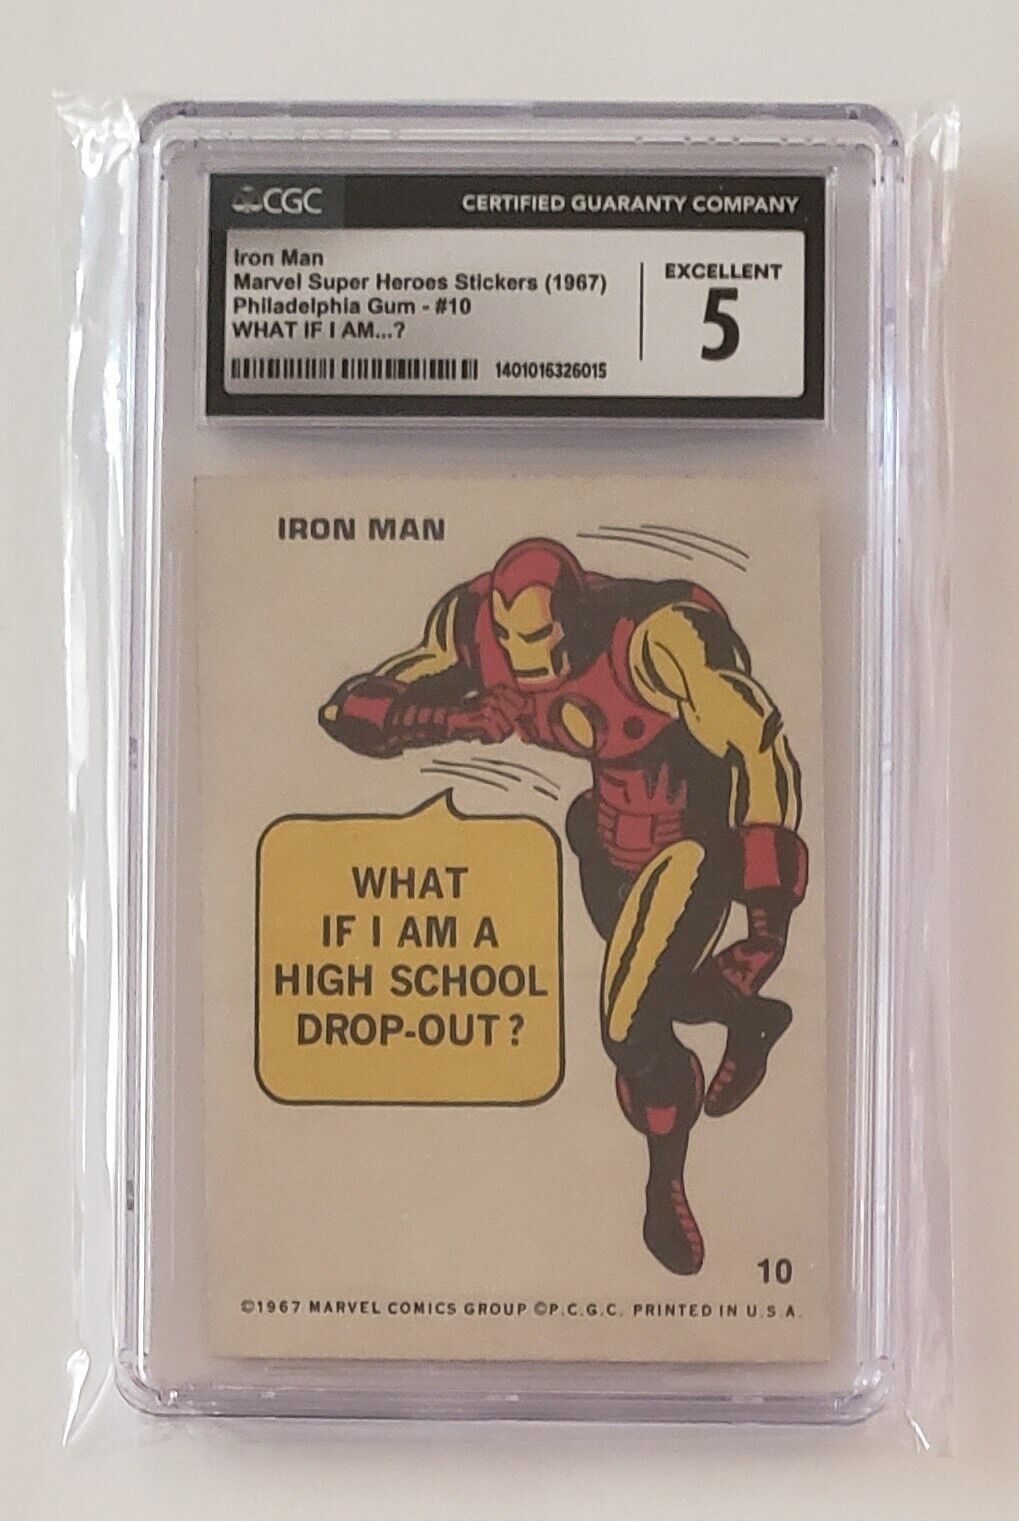 1967 Philadelphia Marvel Super Hero Sticker #10 Iron Man Card Graded CGC 5